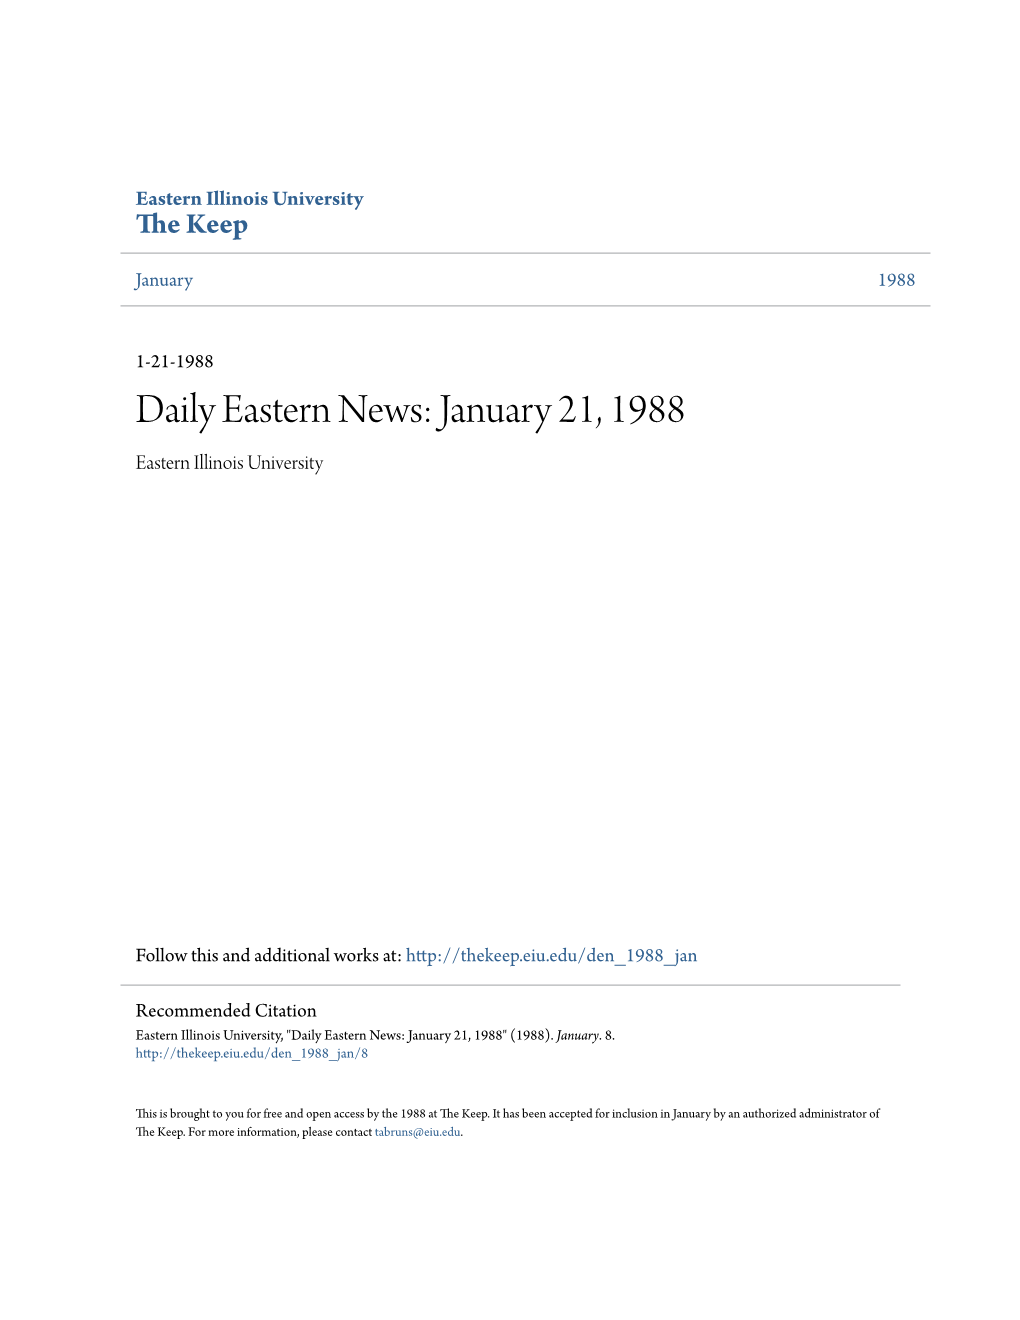 Stern News: January 21, 1988 Eastern Illinois University